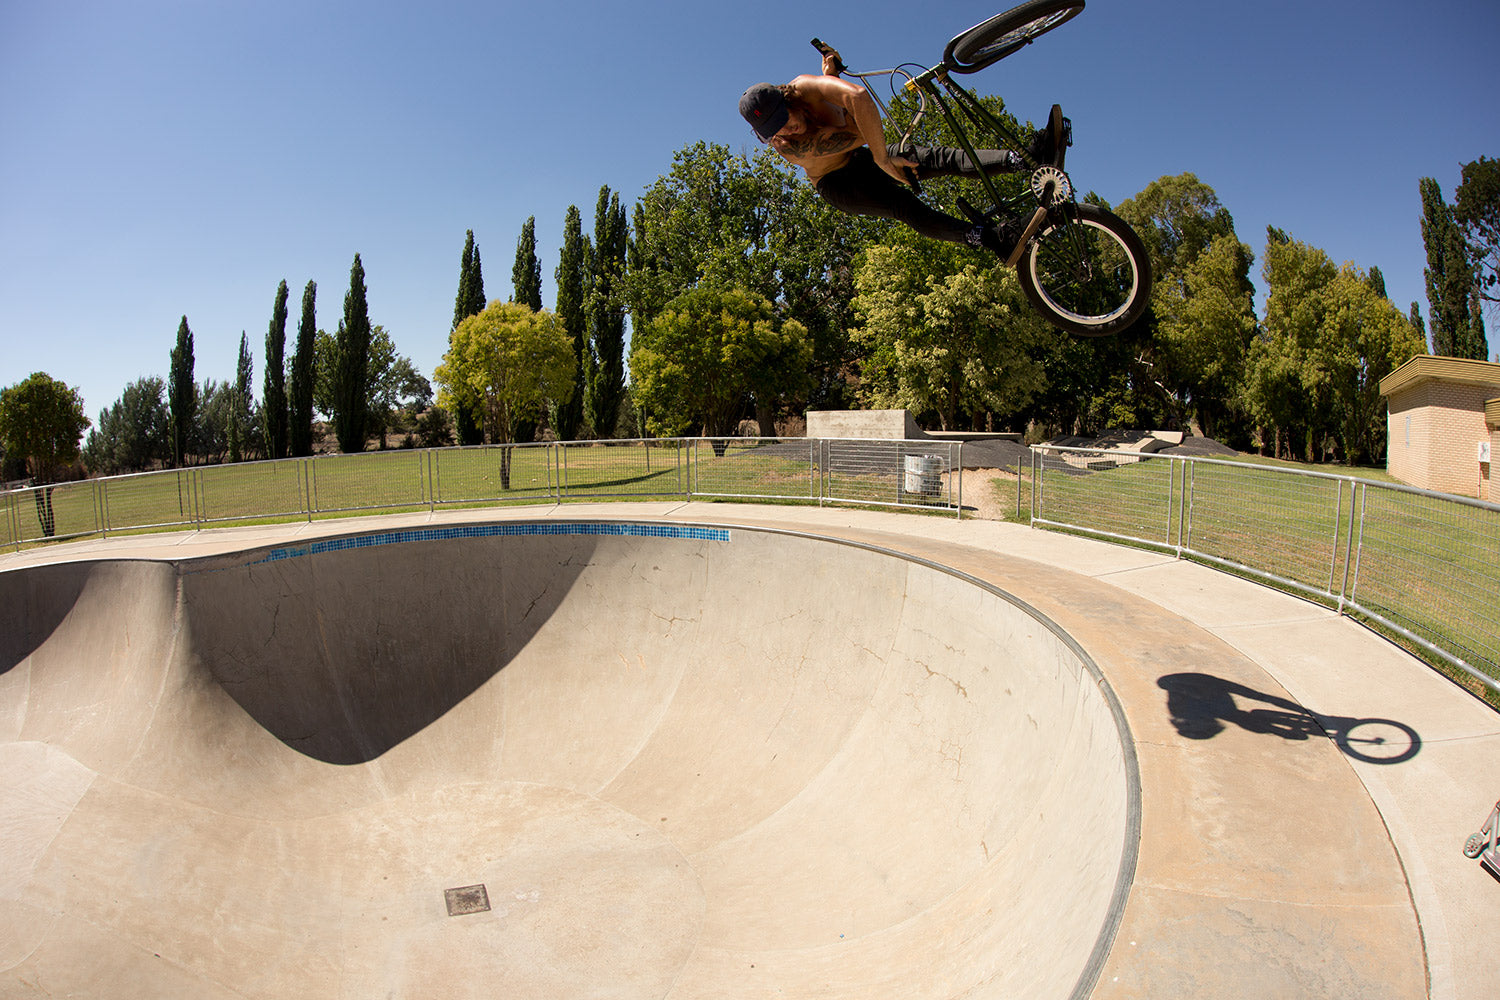 Dylan Lewis at Molong skatepark NSW